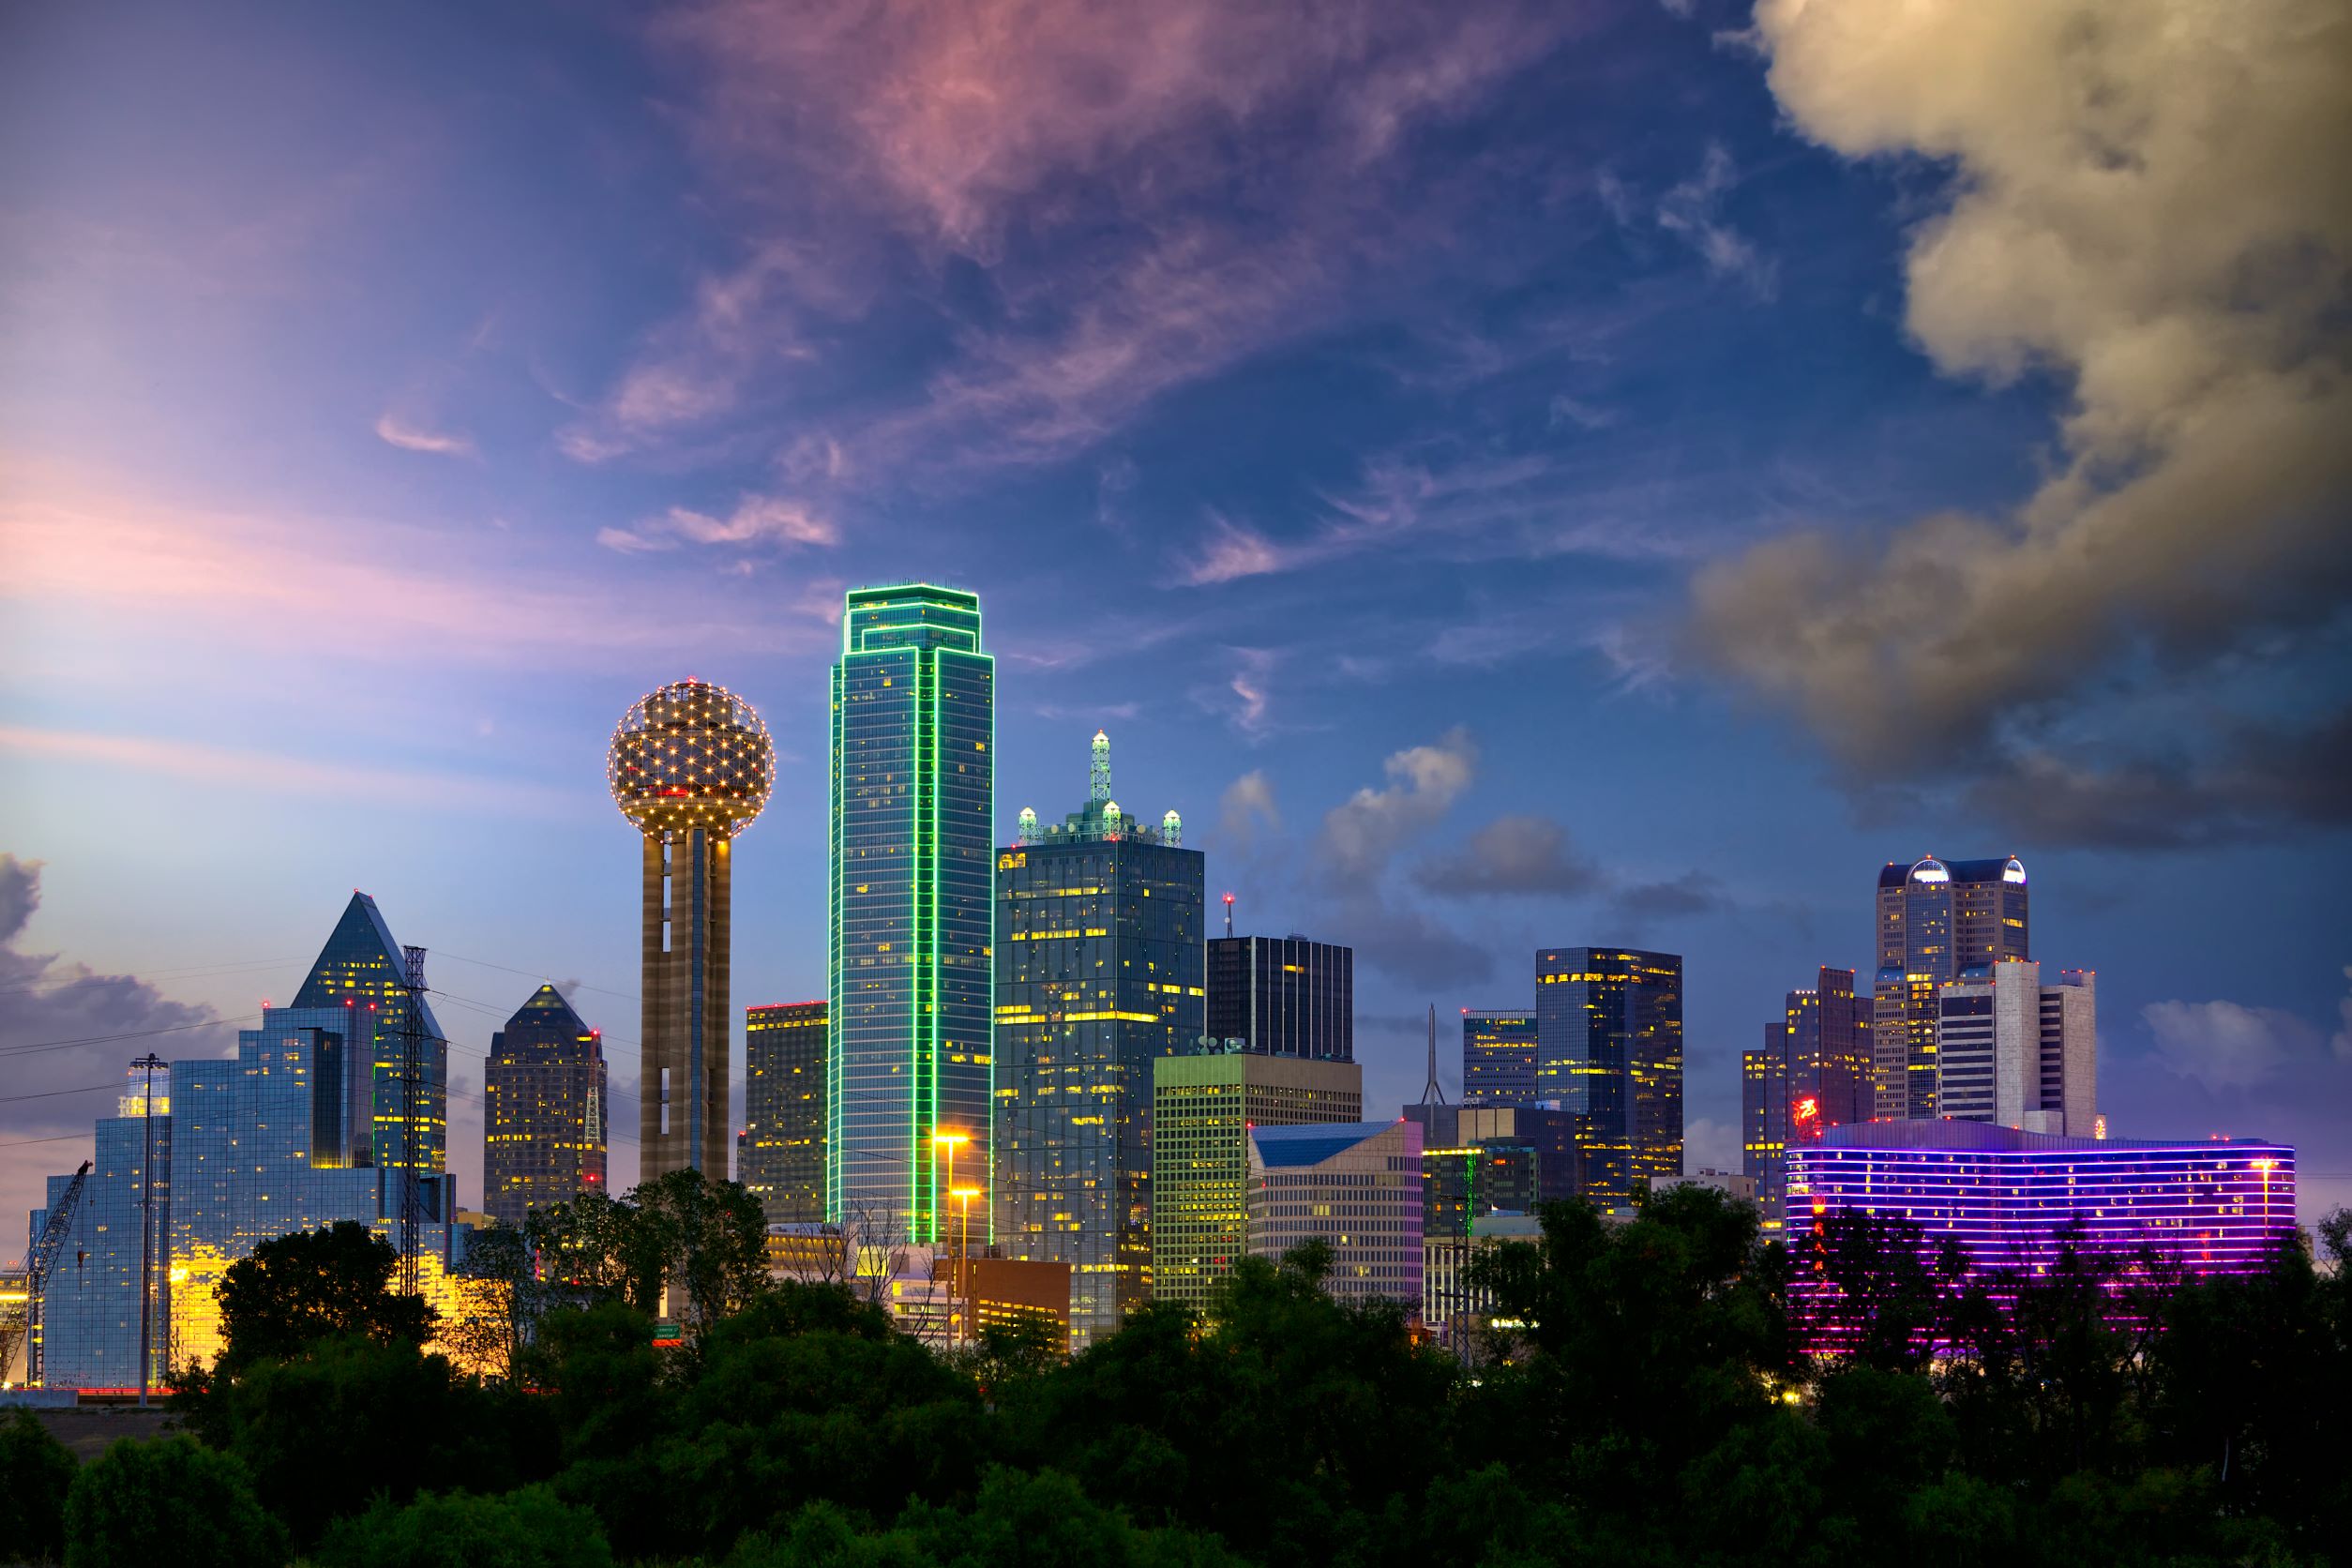 Dallas city skyline